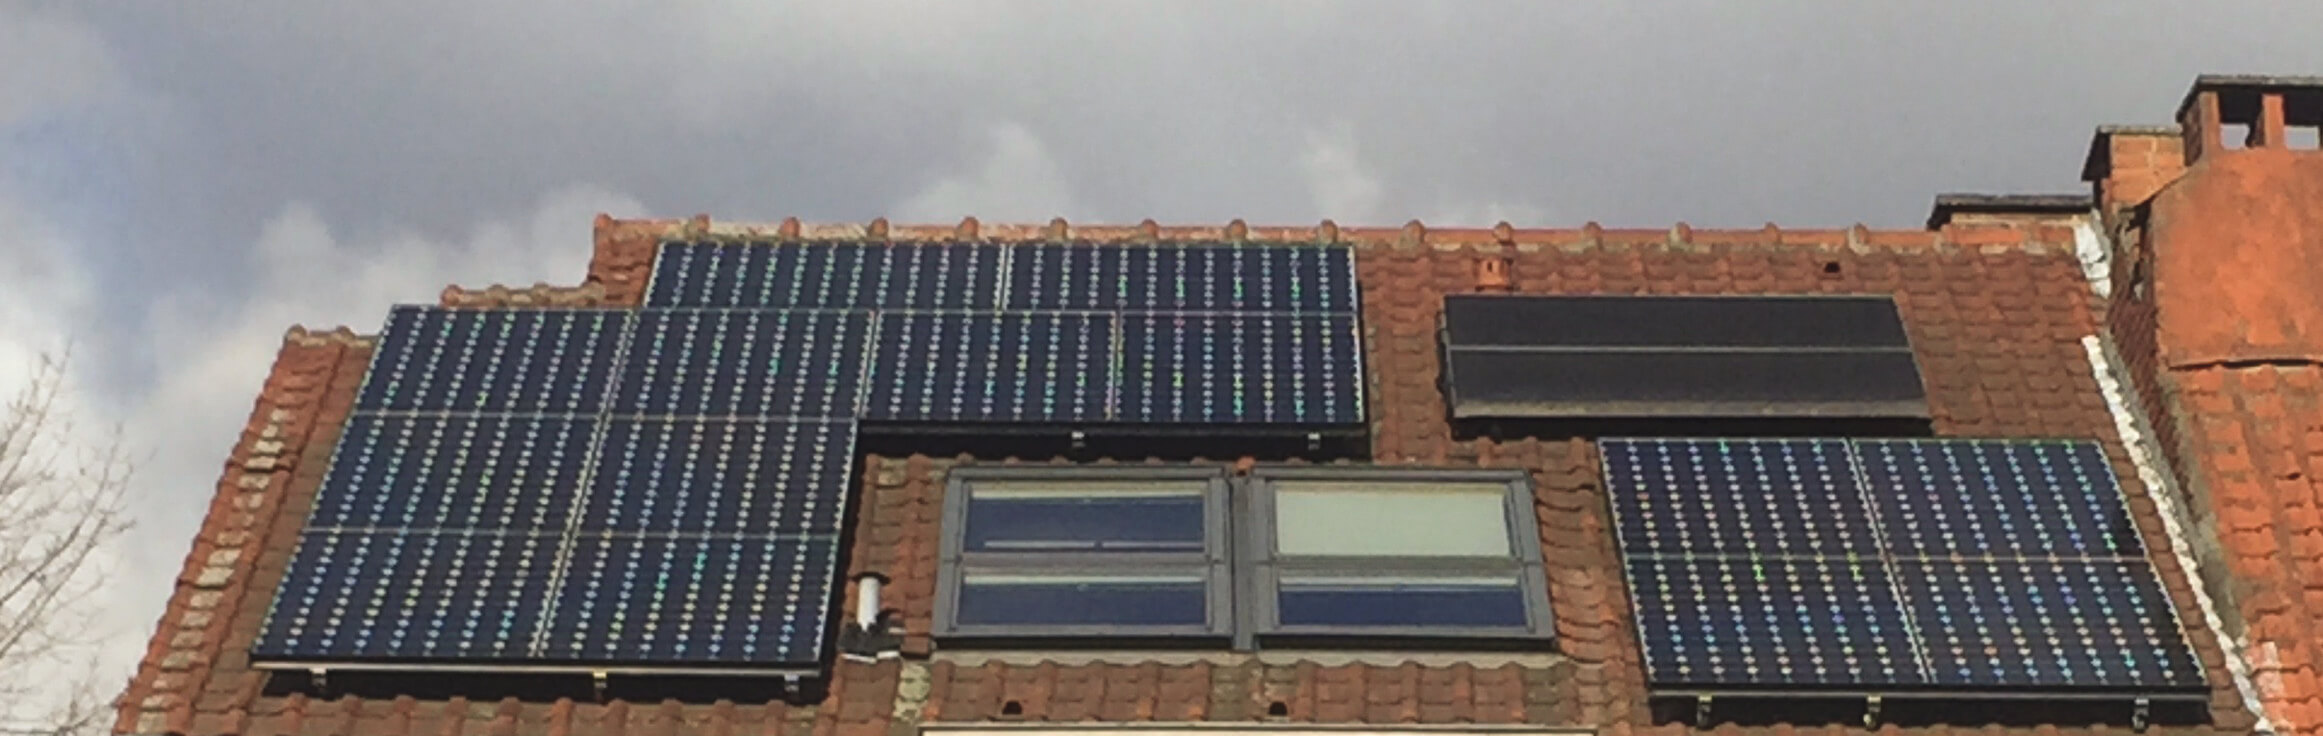 Fotovoltaïsche zonnepanelen en thermische zonnepanelen op een dak